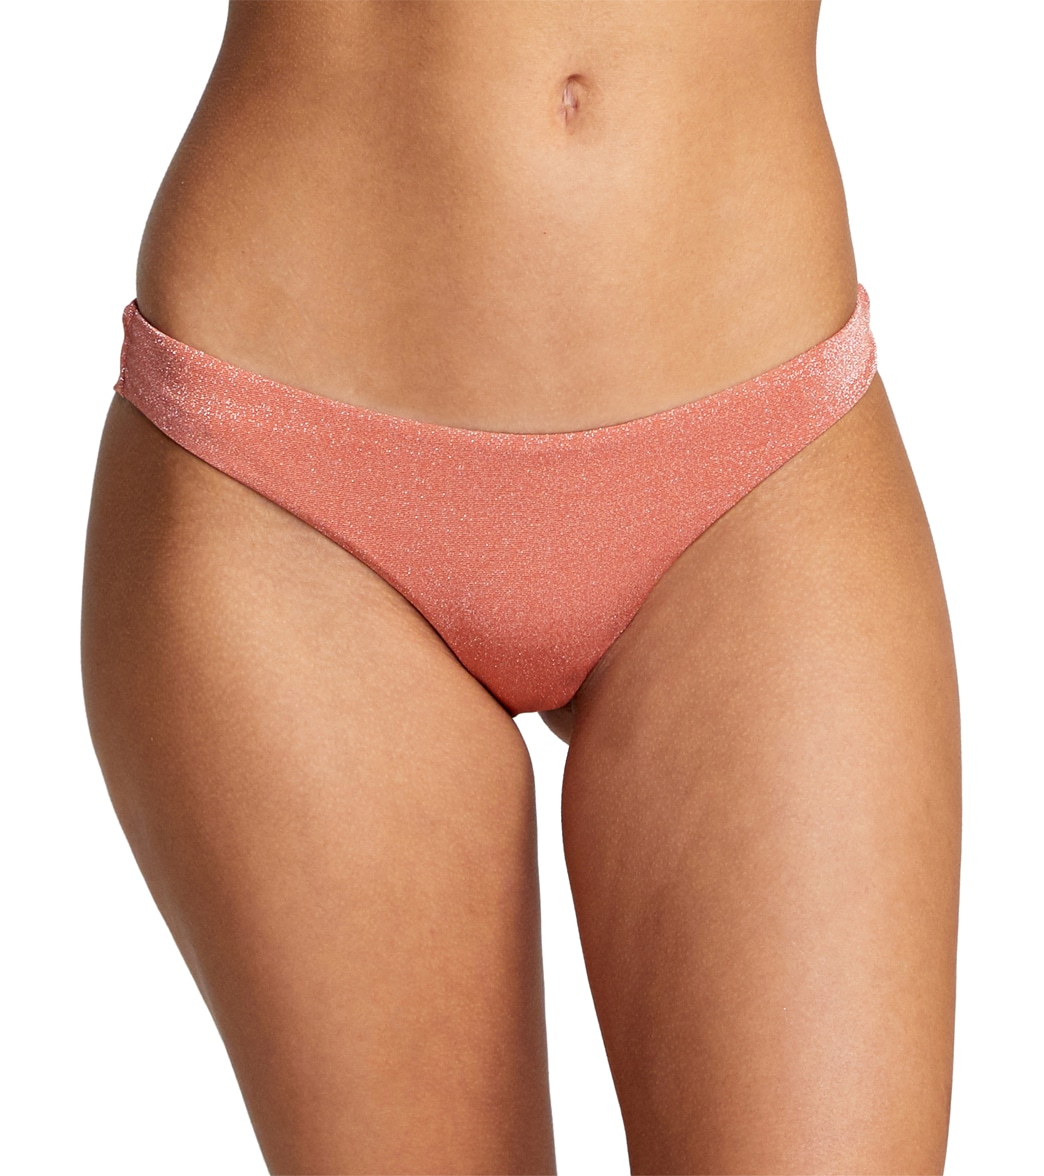 Rvca Women's Strata Cheeky Bikini Bottom - Apricot Large - Swimoutlet.com